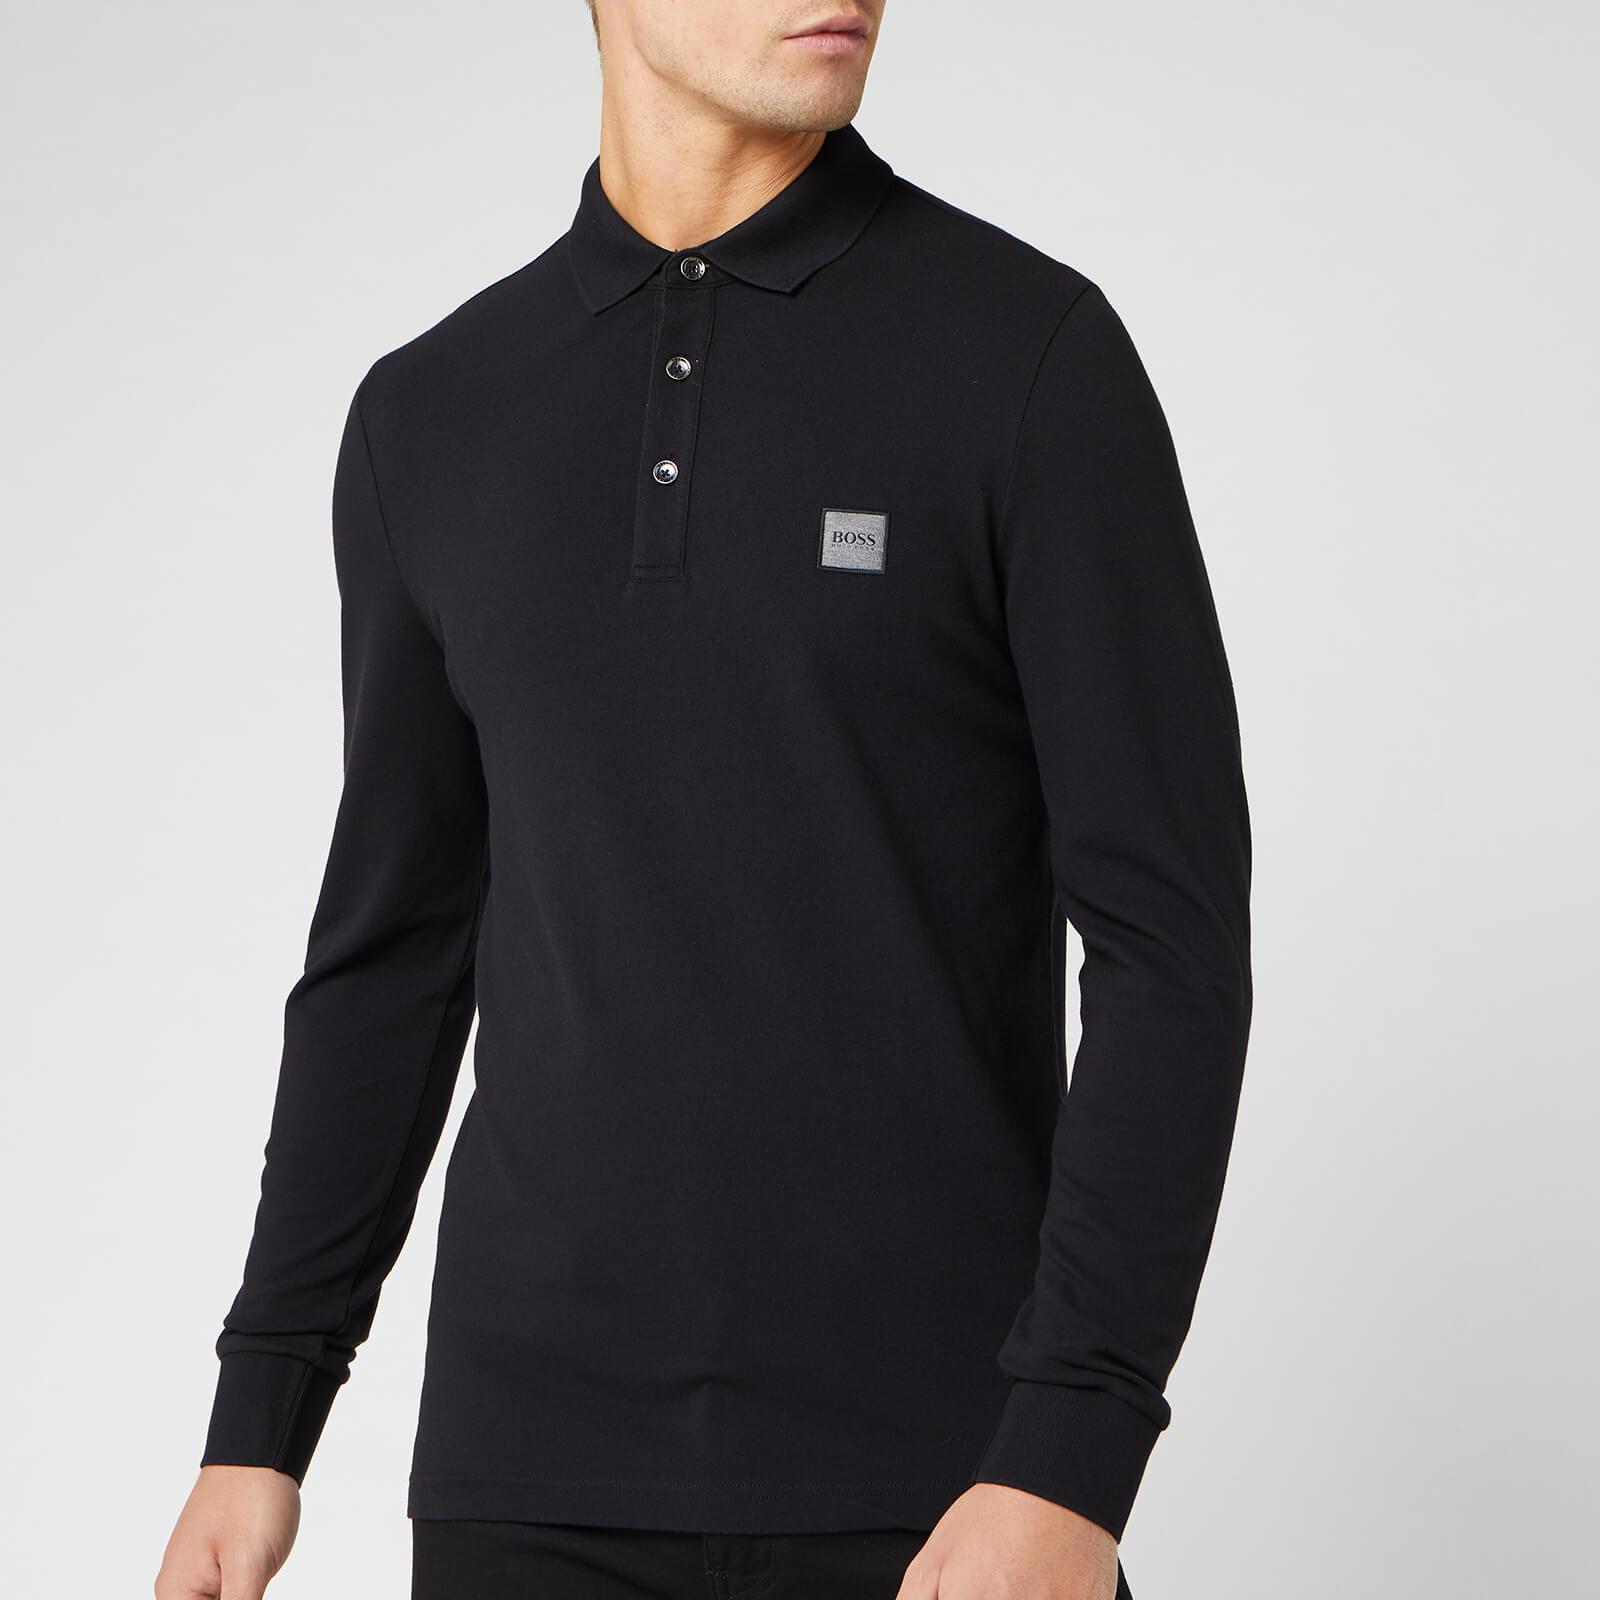 BOSS by HUGO BOSS Boss Passerby Long Sleeve Polo Shirt in Black for Men -  Lyst